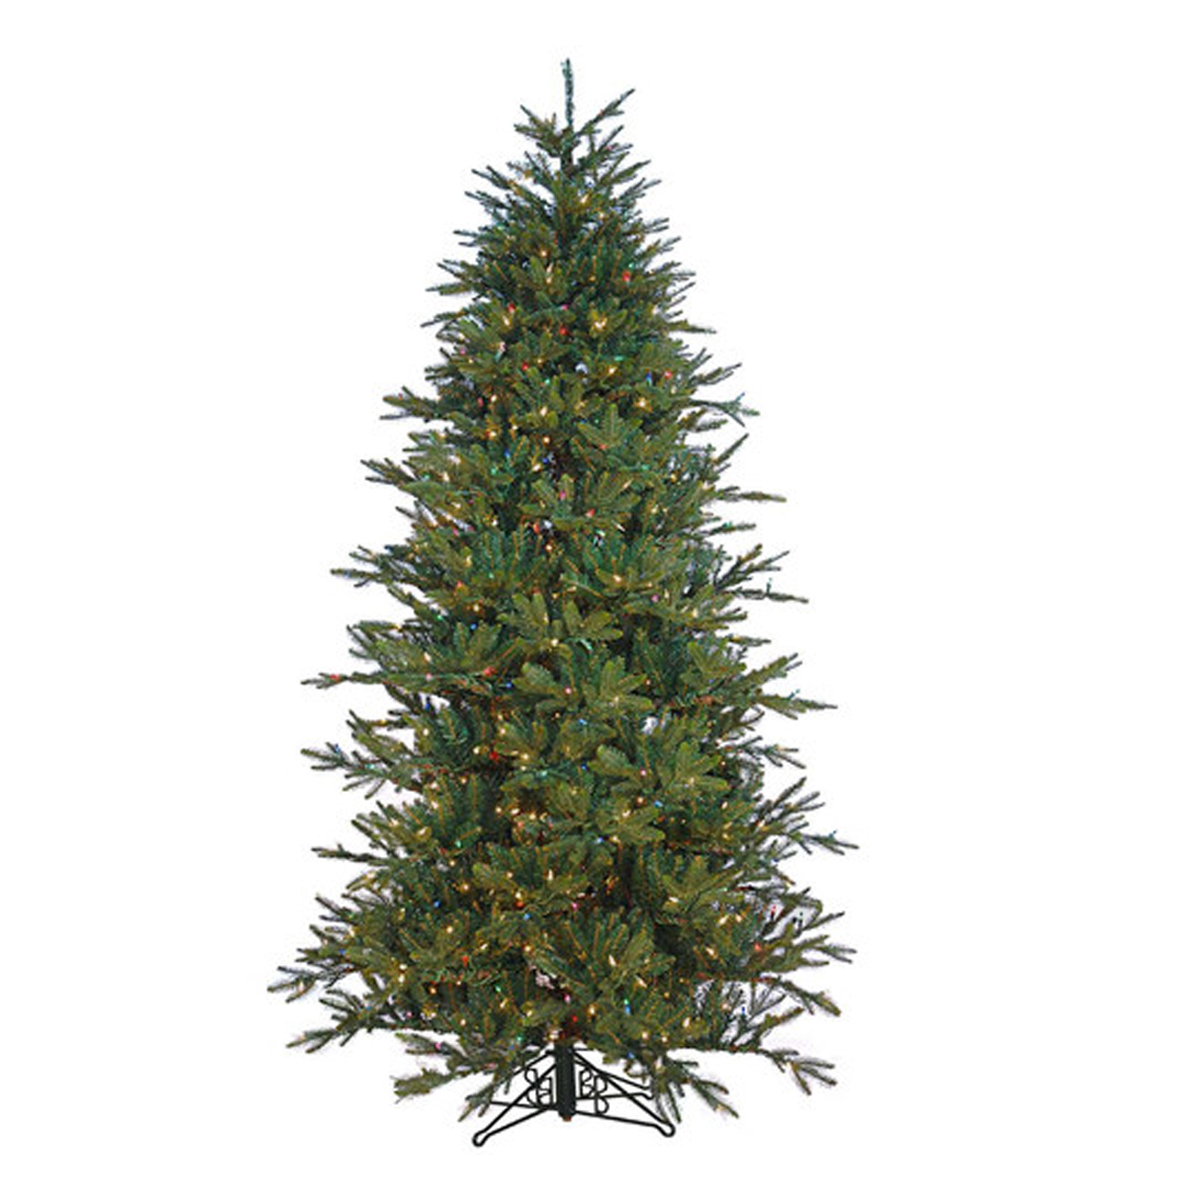 Alaskan Deluxe Christmas Tree - Slim - Warm White LED Lights - One-Plug Power Supply - 10ft Tall